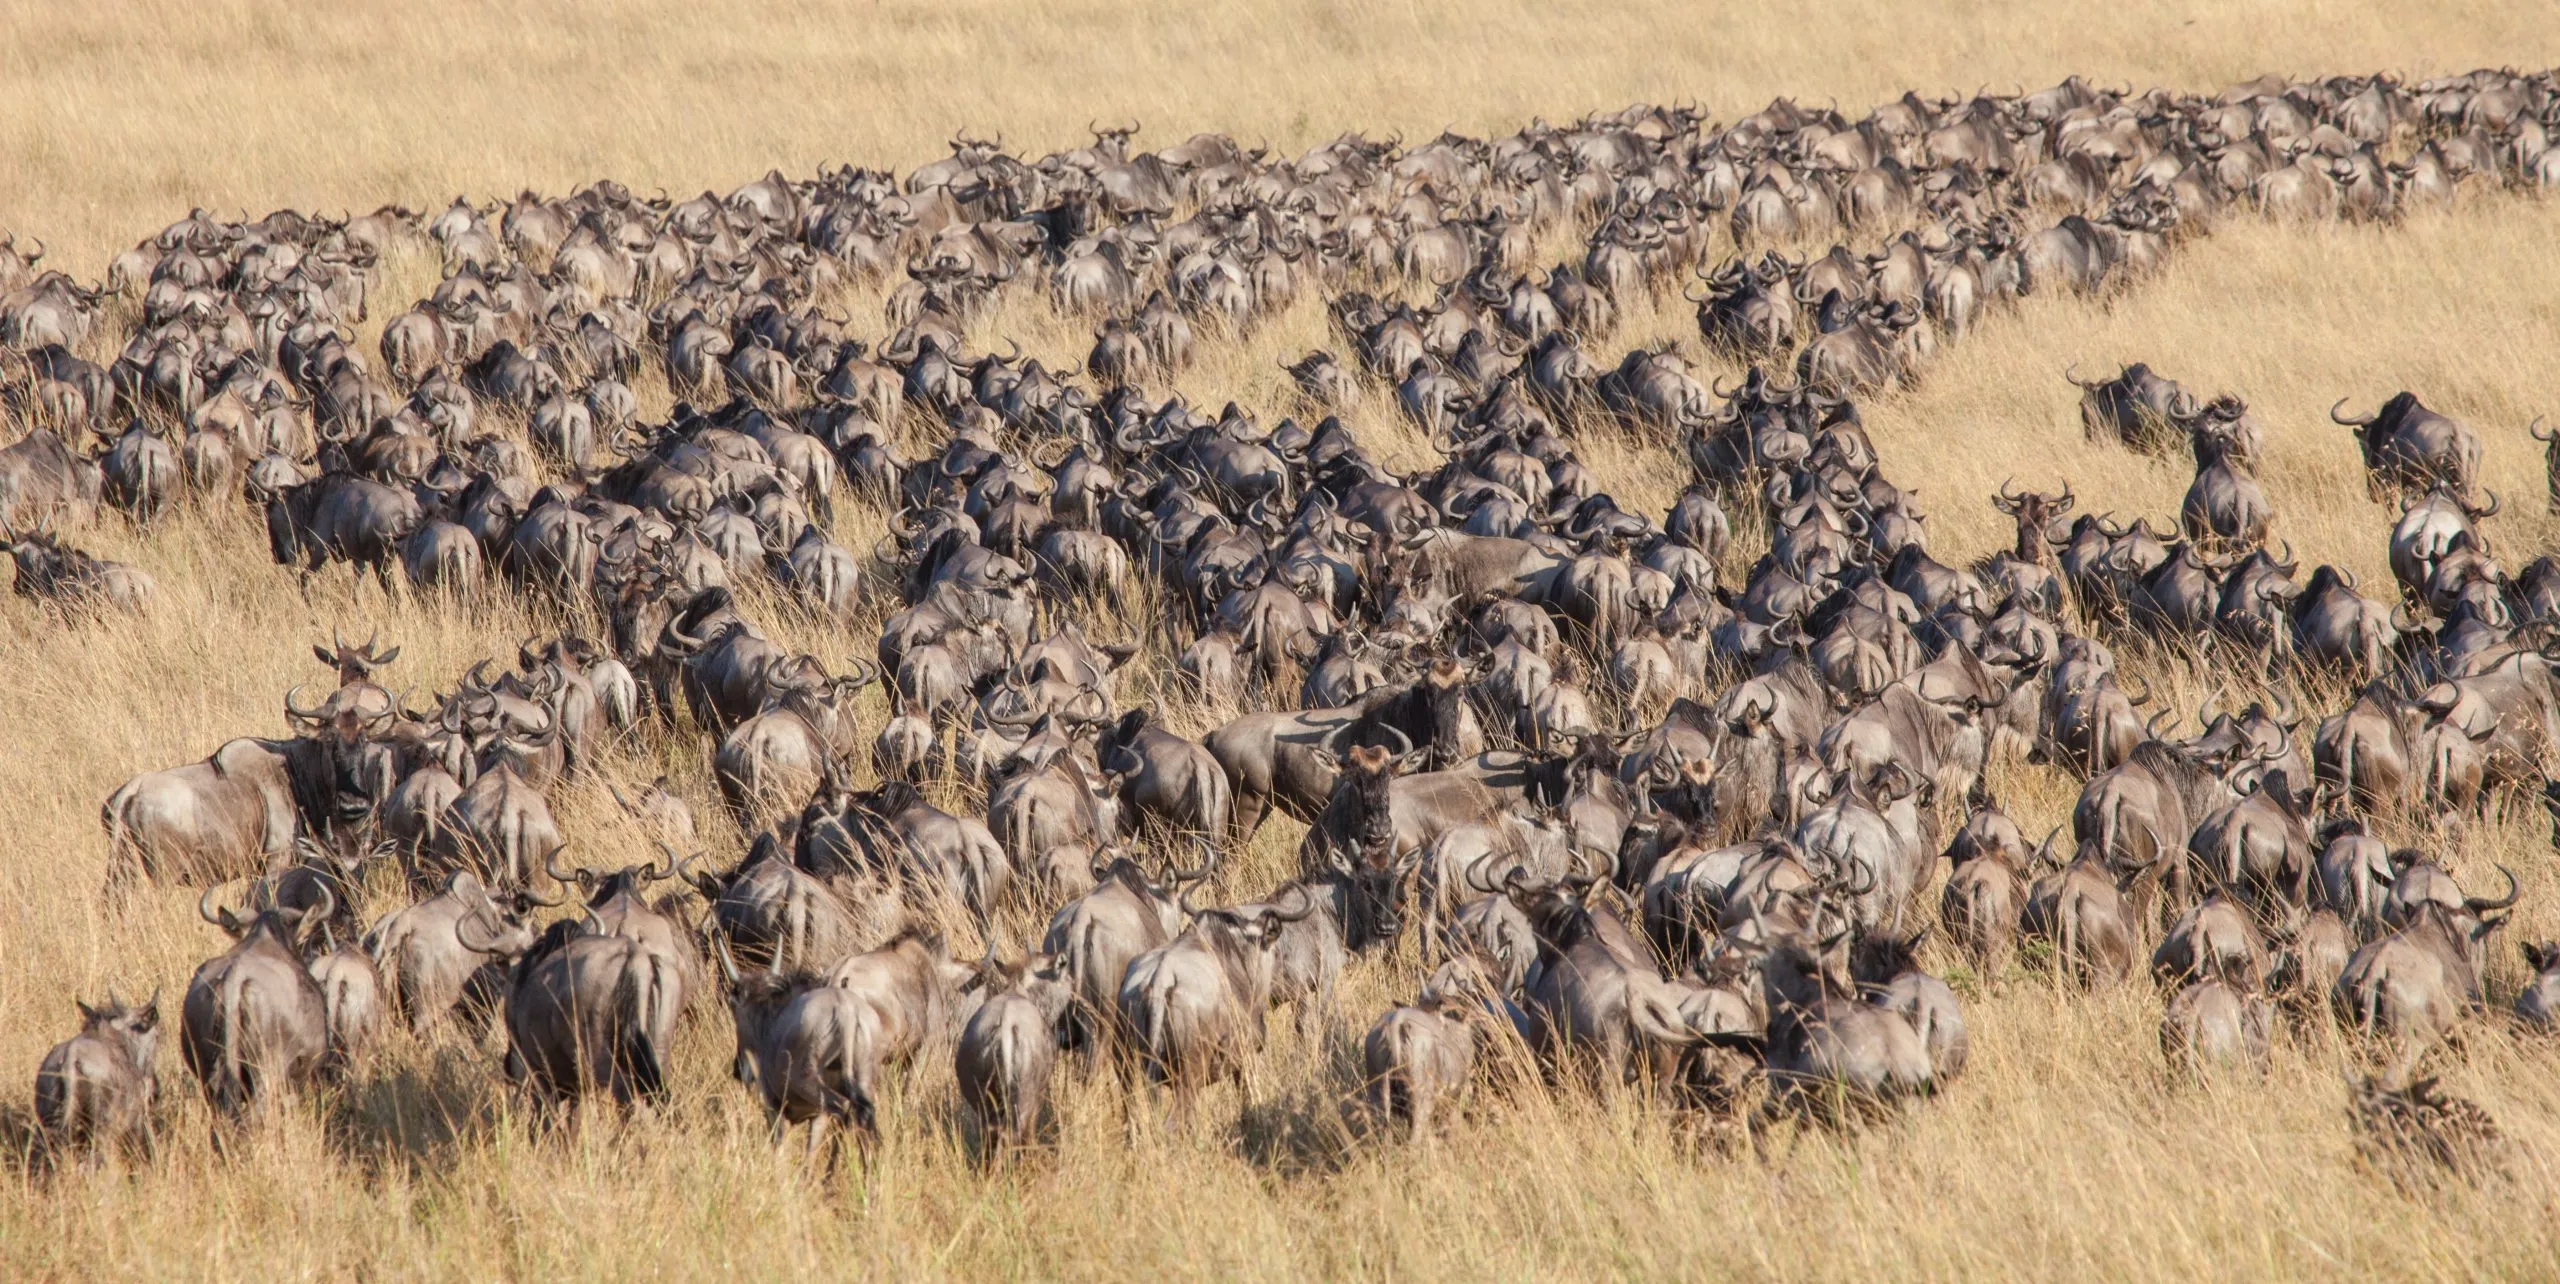 Lunghe file e masse di gnu nella Grande Migrazione del Serengeti e del Masai Mara in Africa orientale